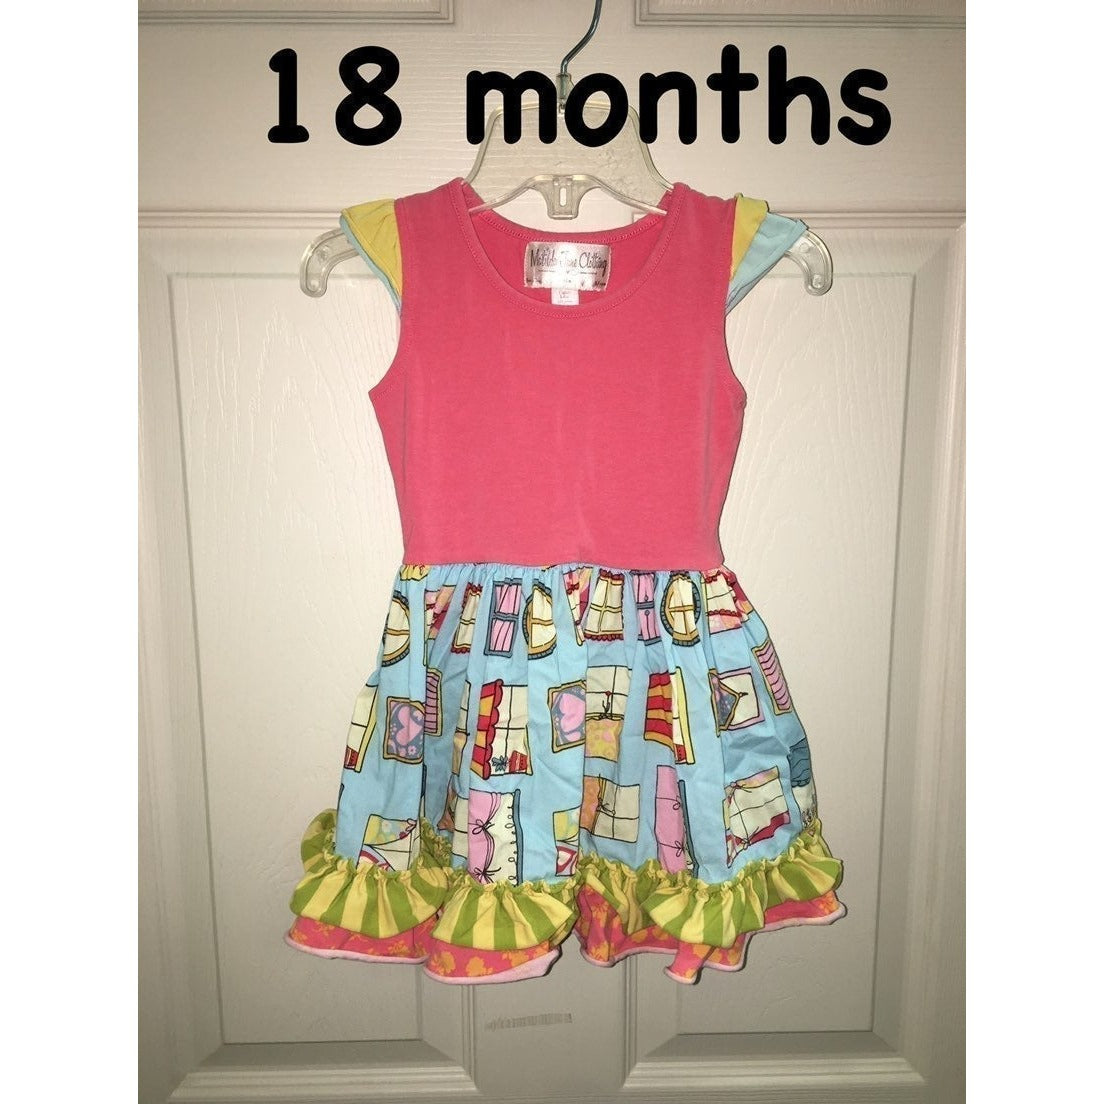 18 months matilda jane symon’s general store dress